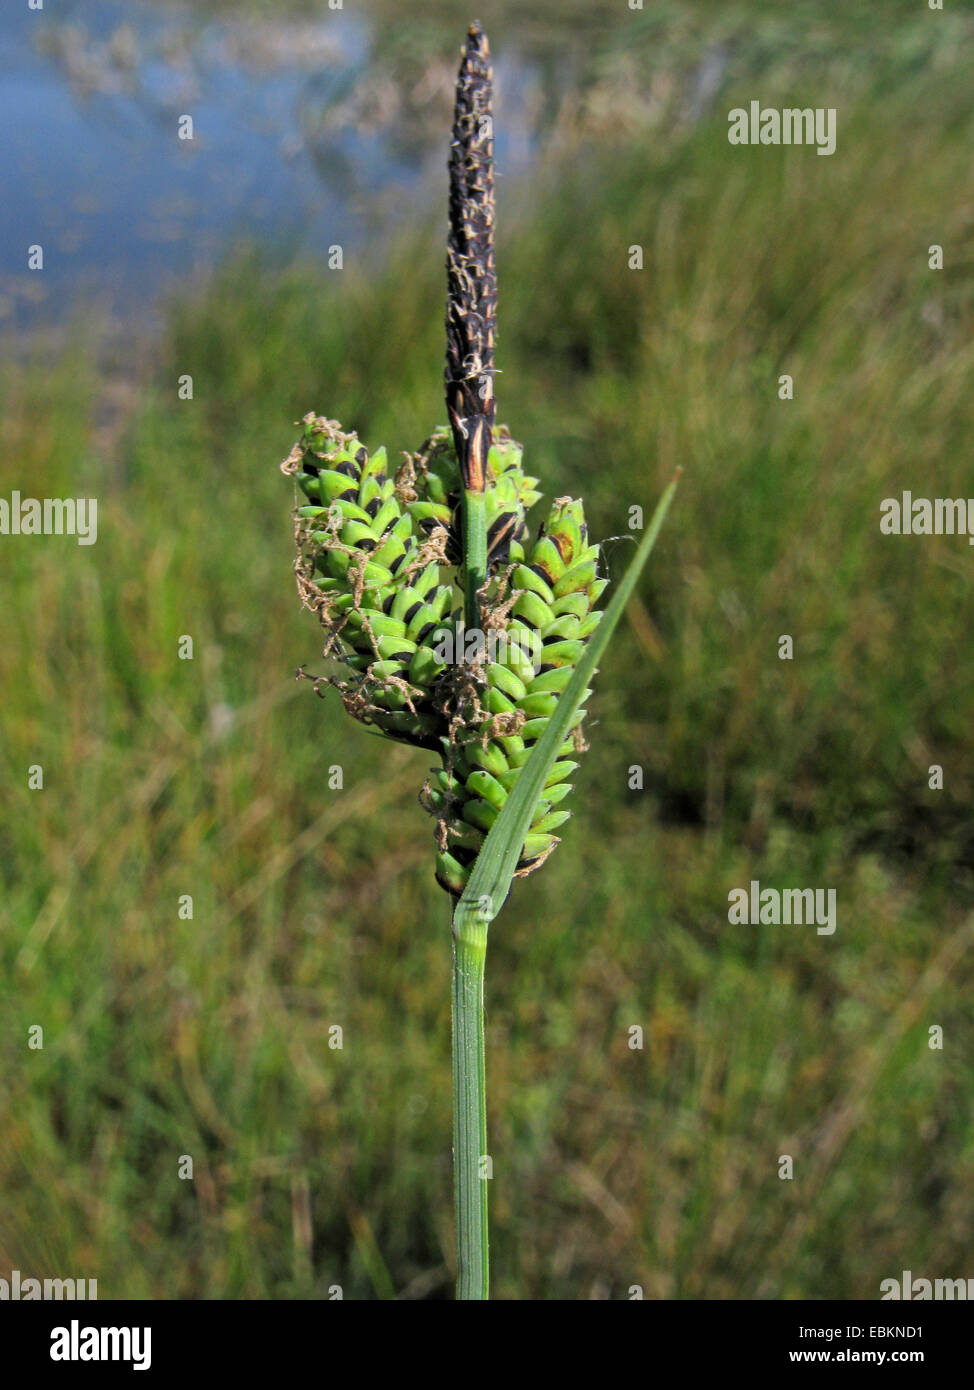 common sedge (Carex nigra, Carex fusca), inflorescence with male and female inflorescences, Germany, North Rhine-Westphalia Stock Photo